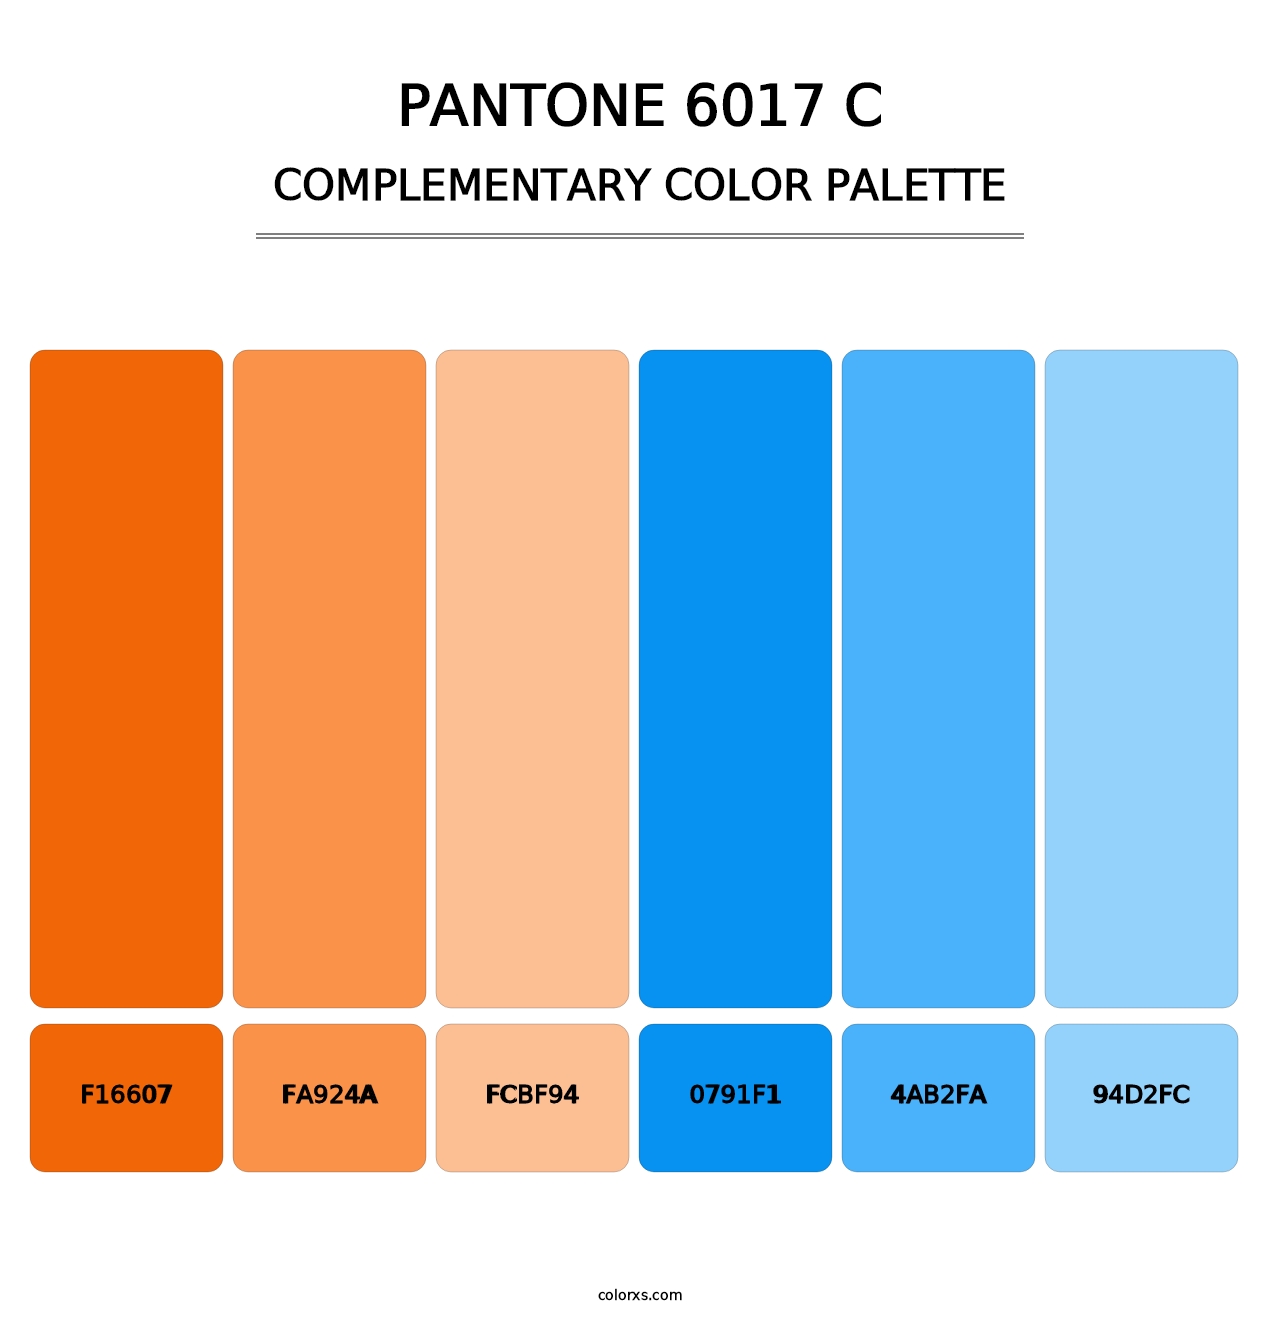 PANTONE 6017 C - Complementary Color Palette